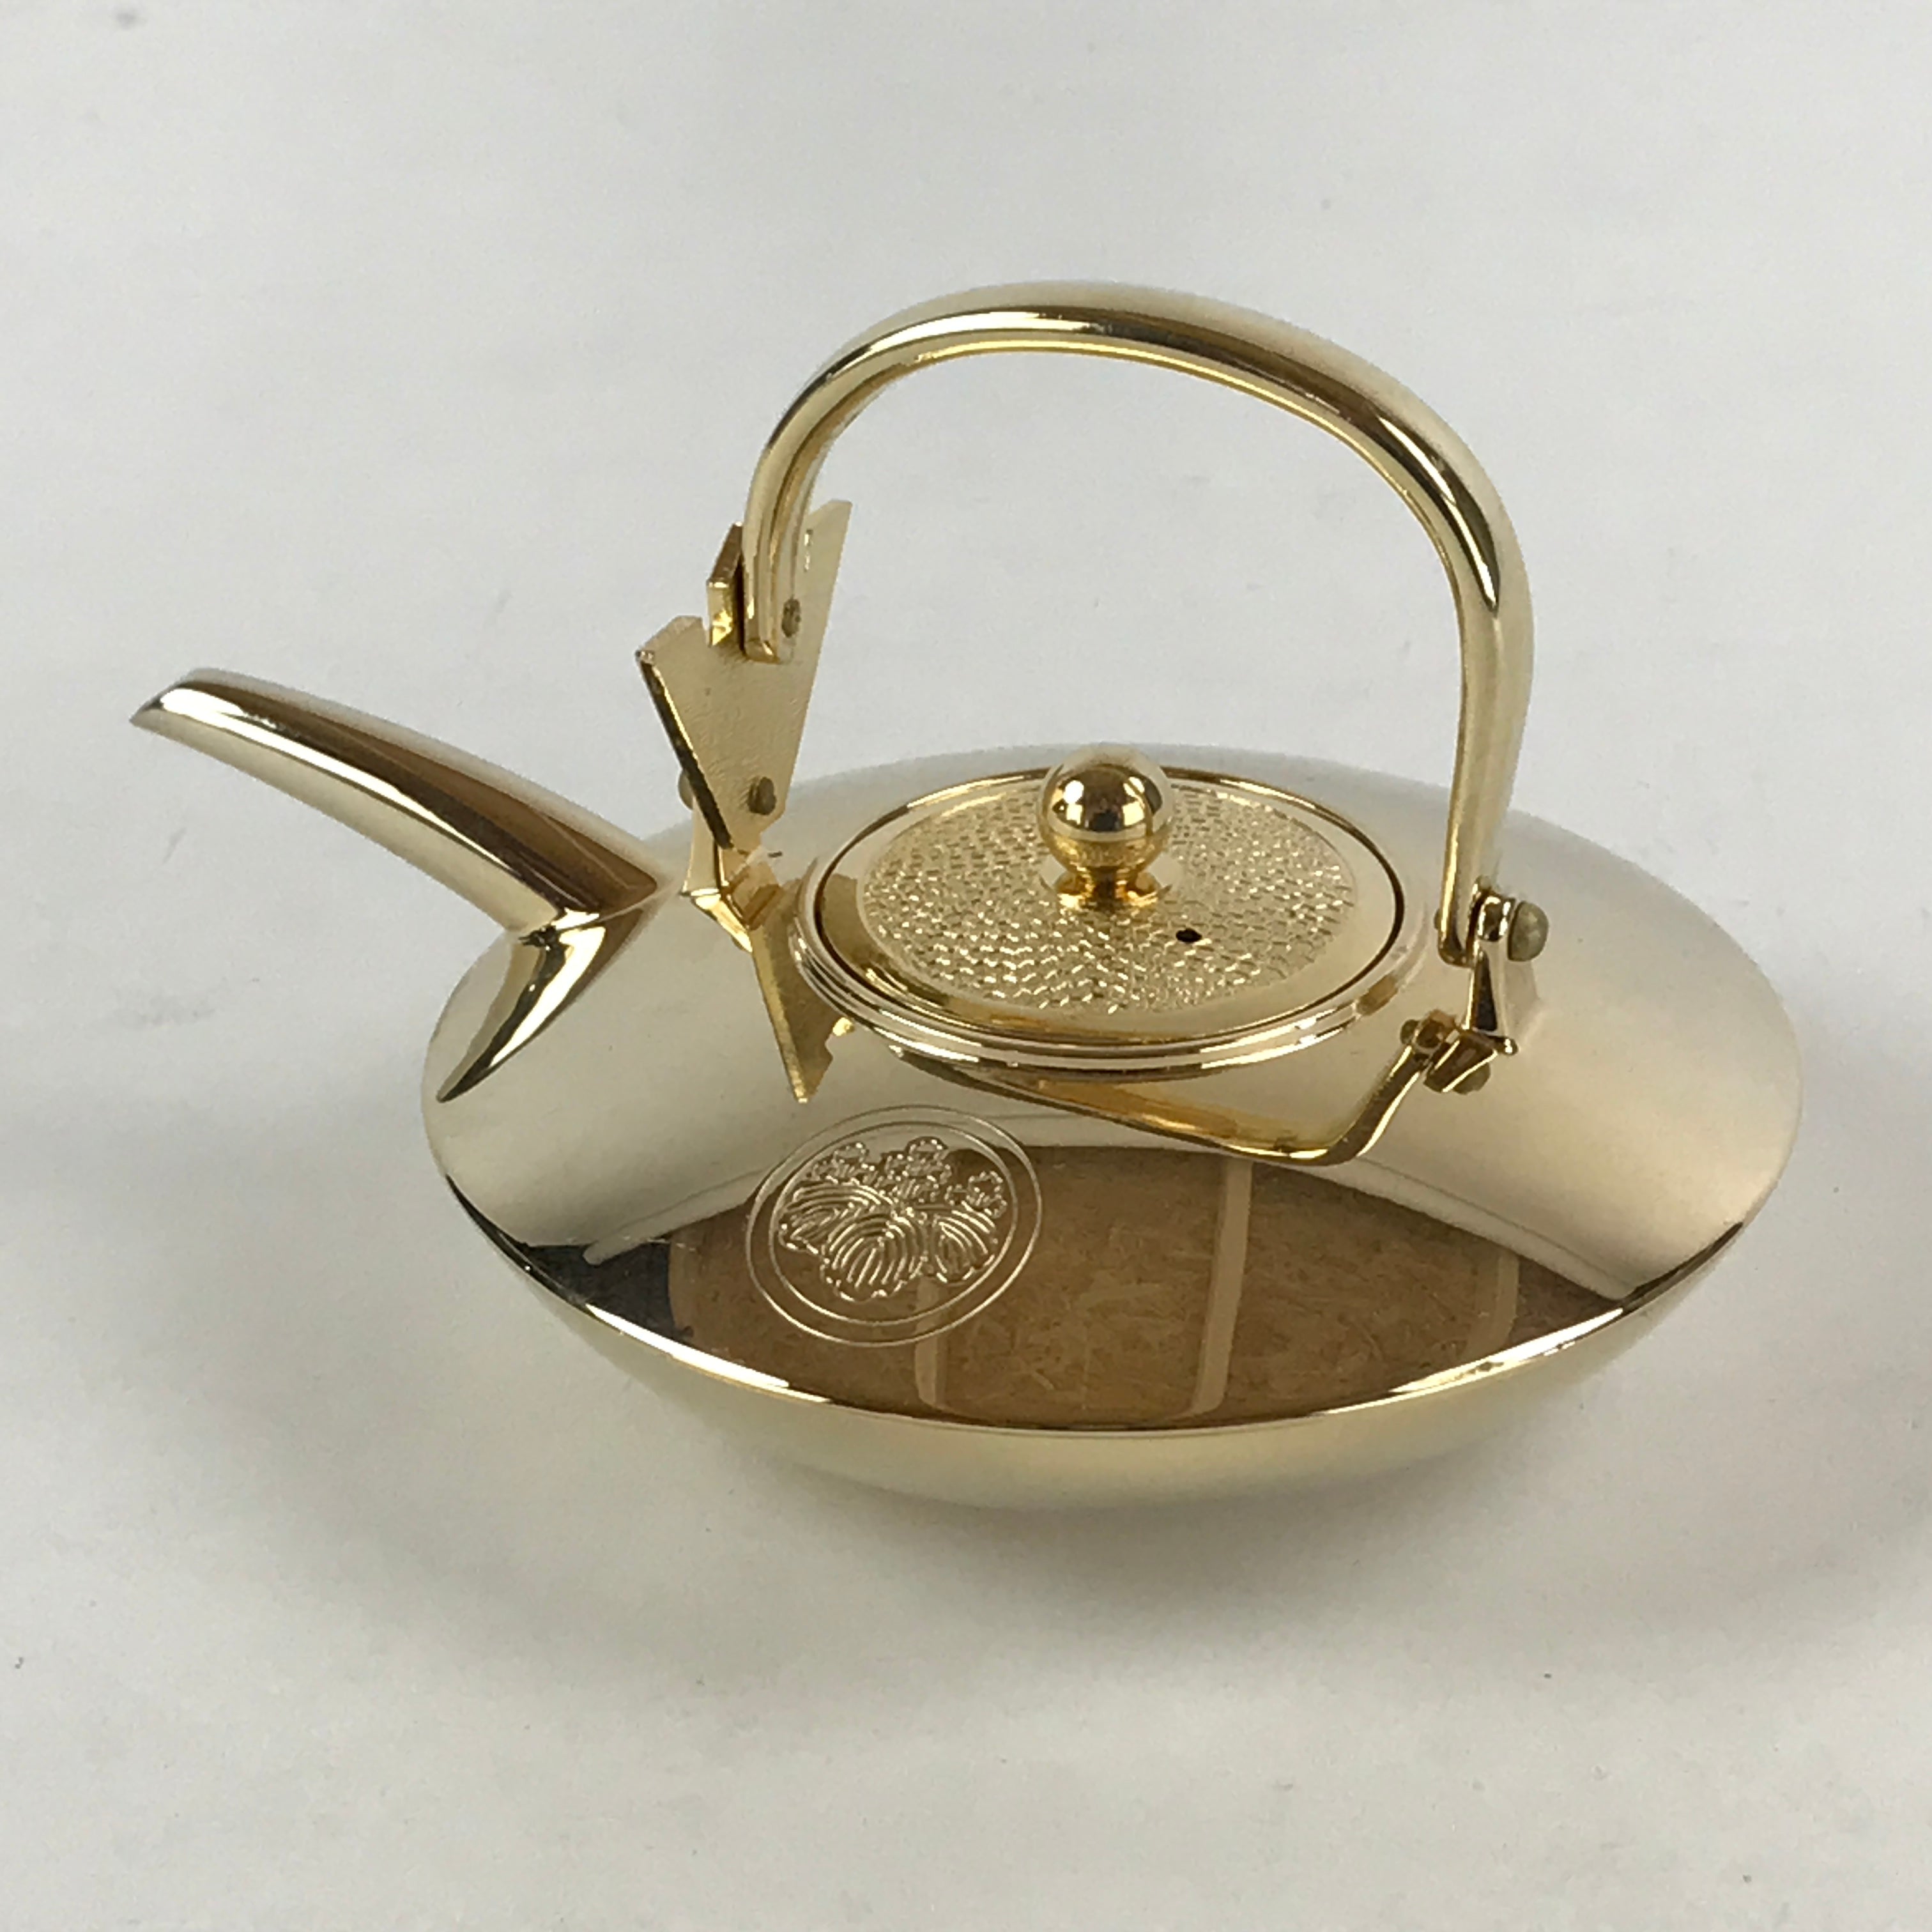 Japanese Decorative Teapot Replica Vtg 24K Gold Plate PY459